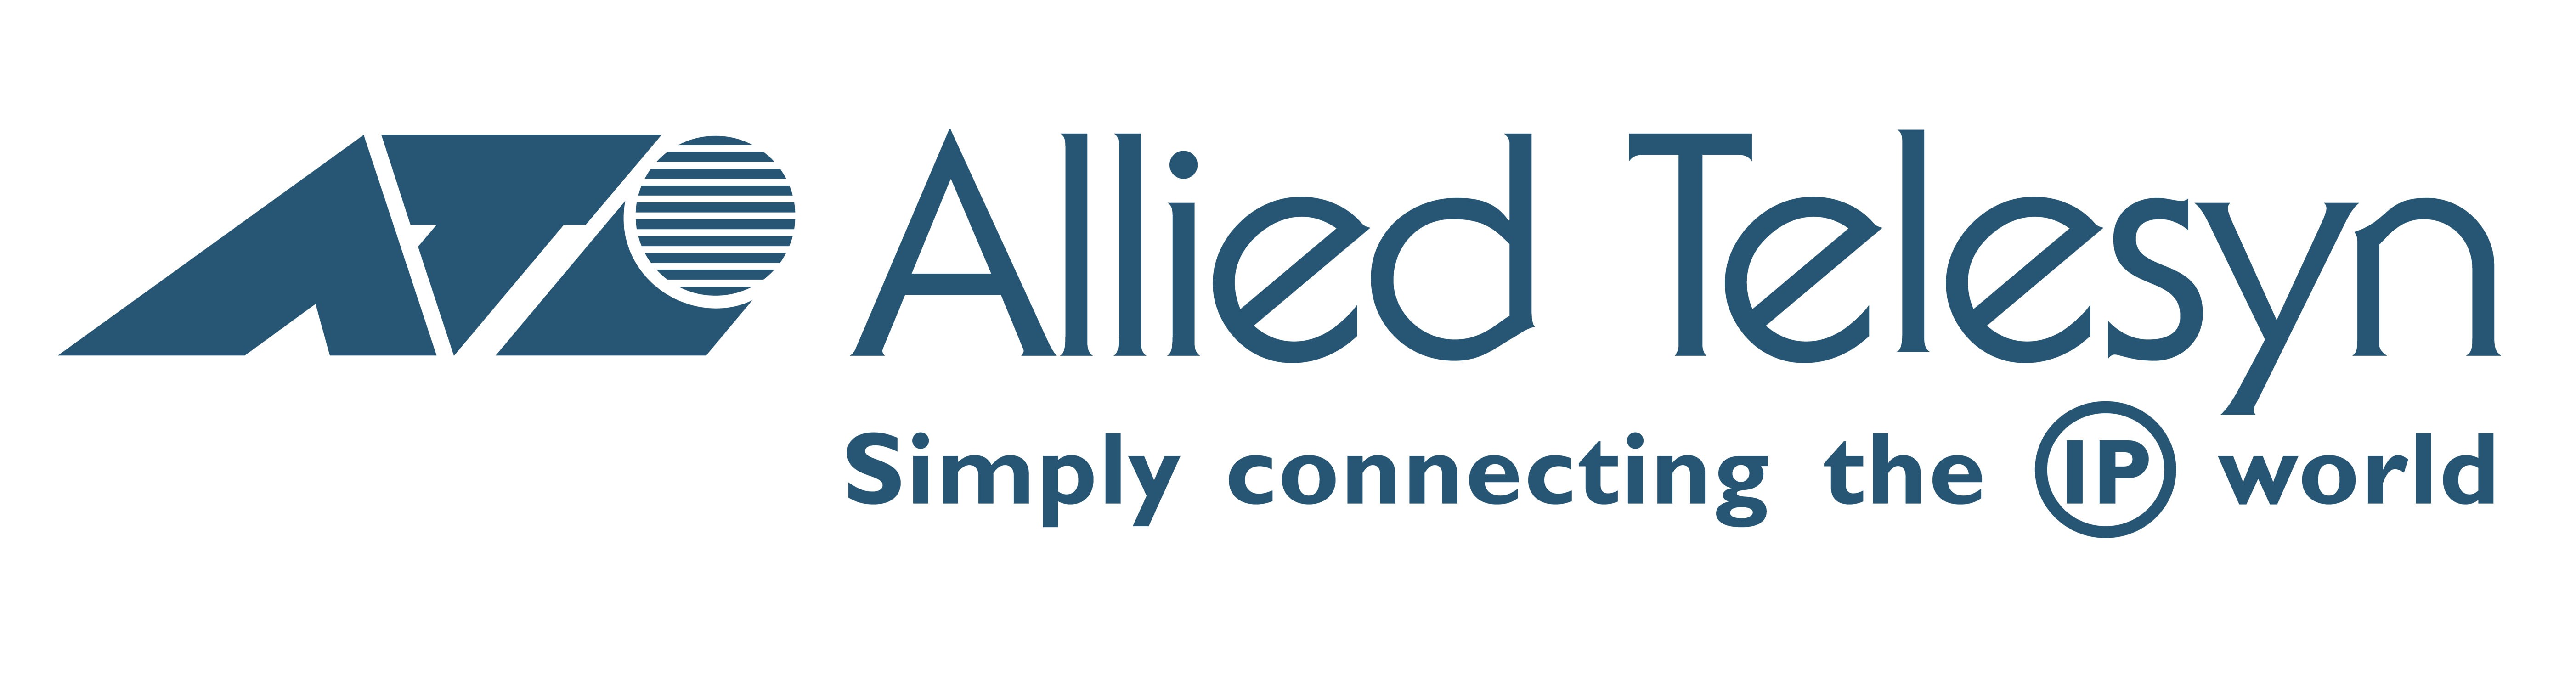 Simple connect. Логотип производителя технологии Allied Telesis. Allied Telesyn simply connecting. Логотип Телесин. Allied artists pictures …логотип.